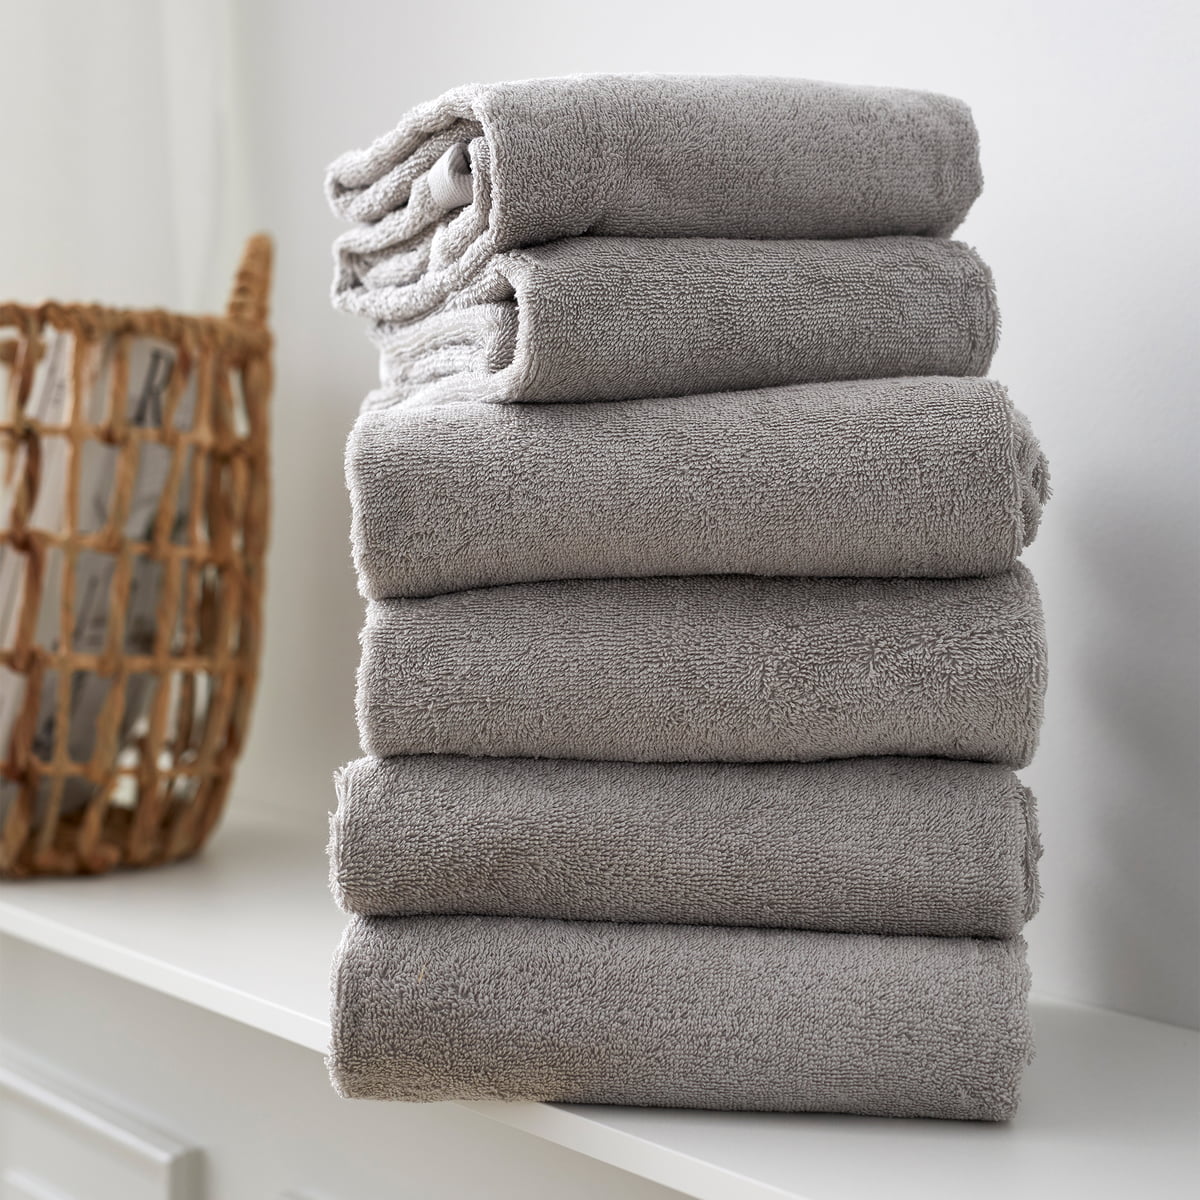 Полотенце комфорт. A comfortable Towel. From a Towel taken background.